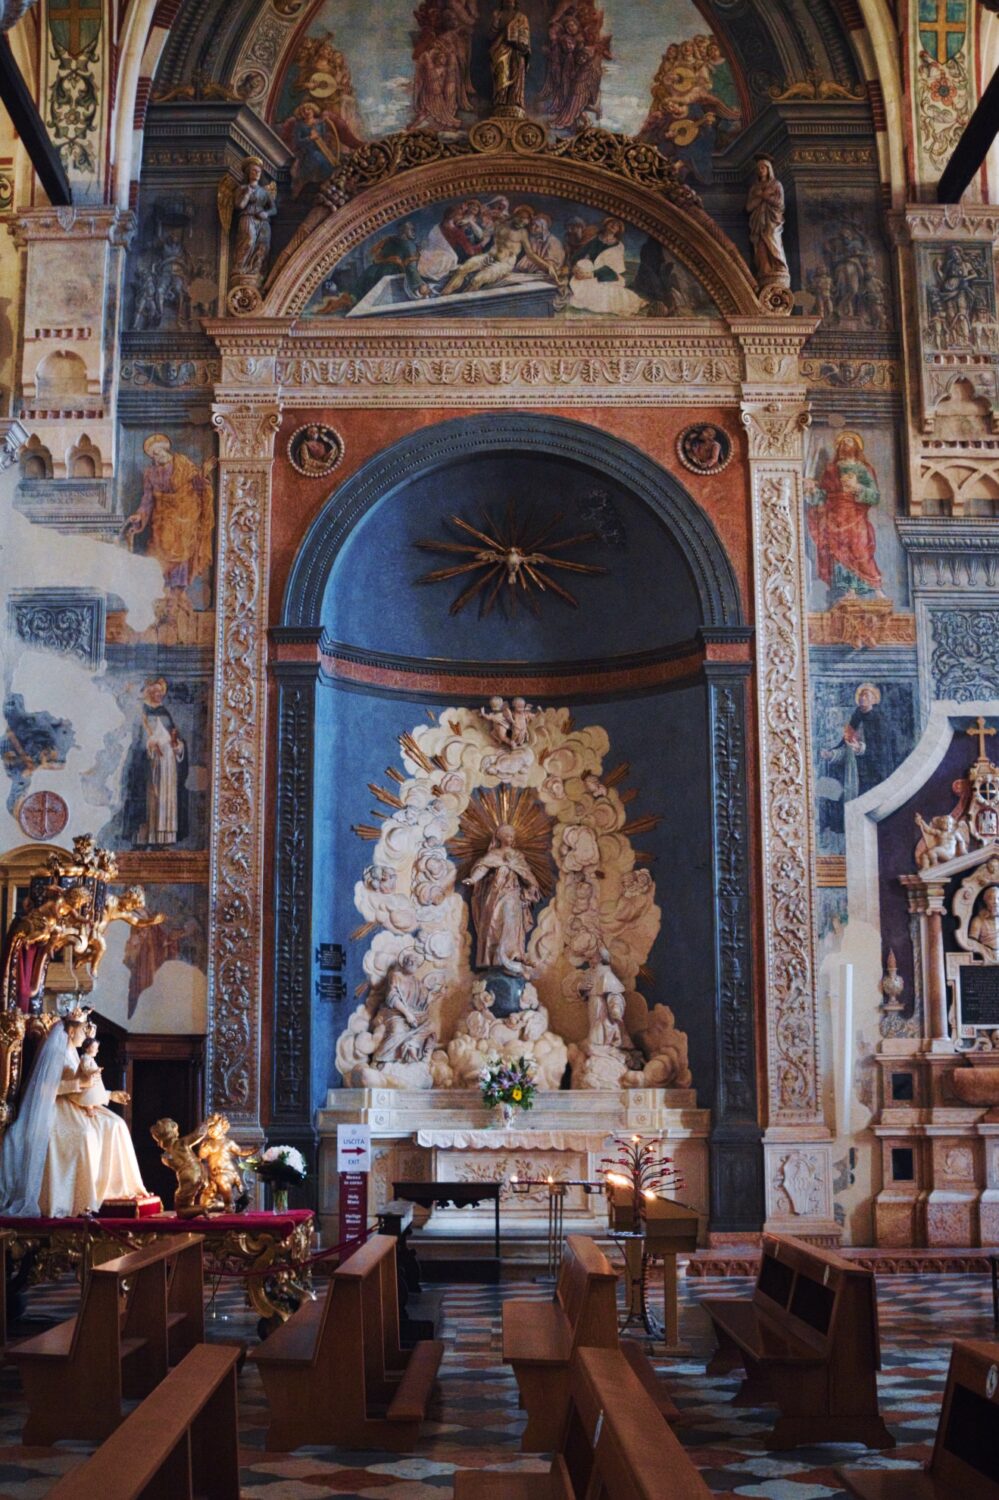  Basilica di Santa Anastasia - Verona 